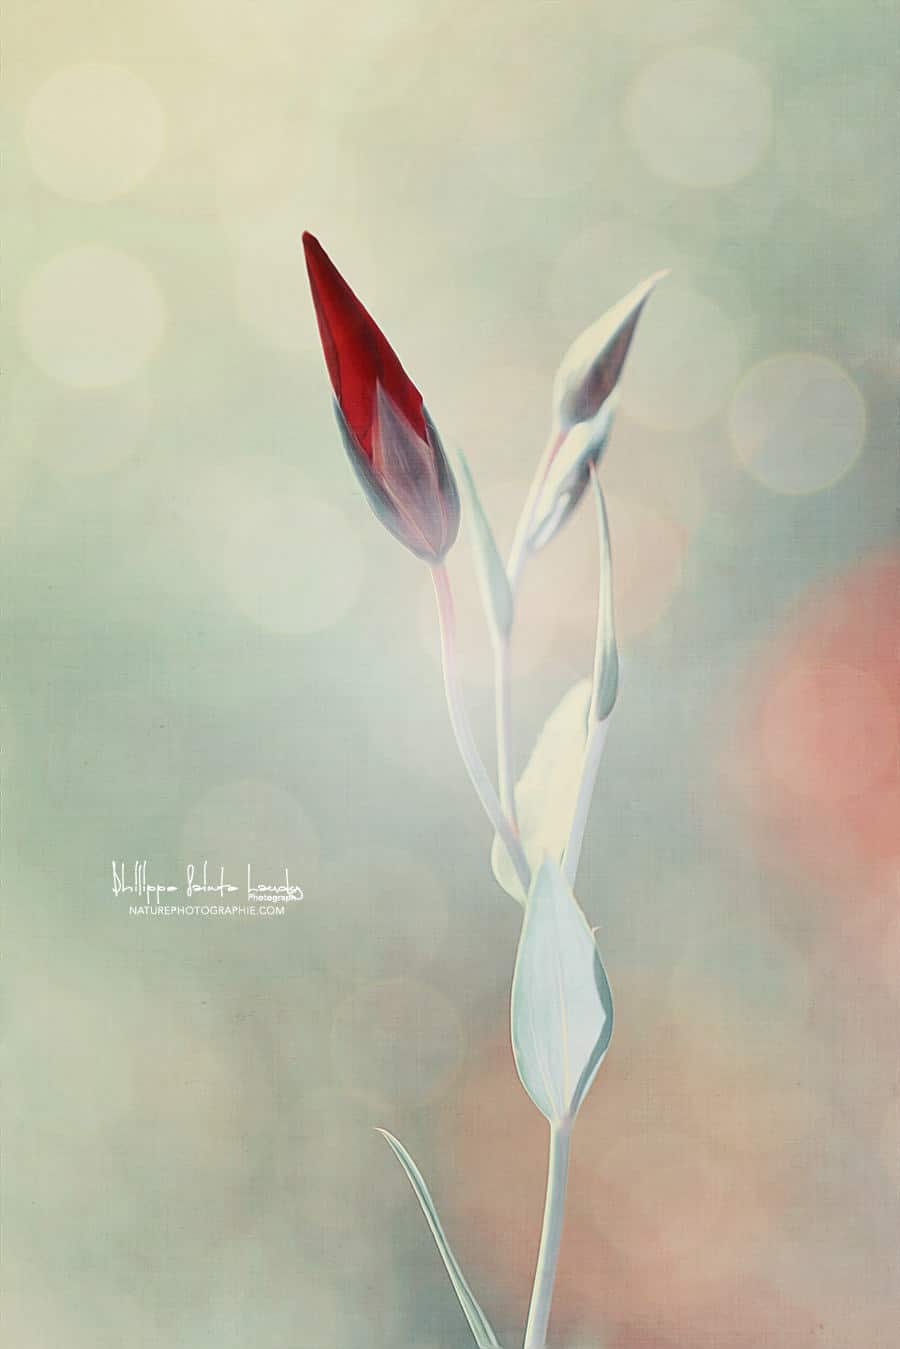 Bourgeon de tulipe rouge avec texture